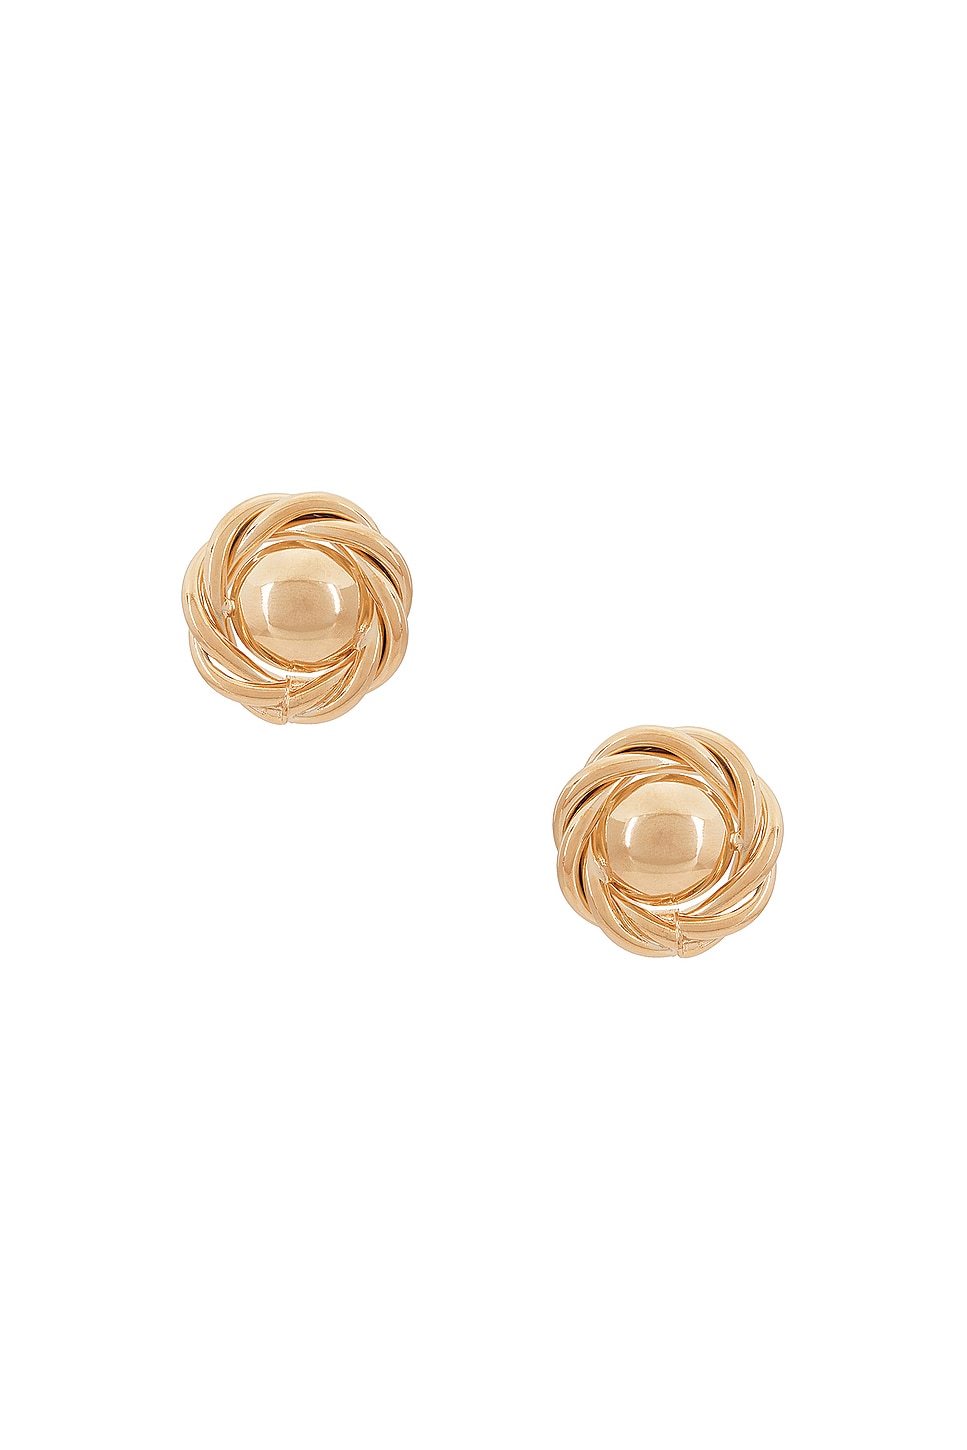 Image 1 of Jordan Road Jewelry Vintage Button Earrings in 18k Gold Plated Brass